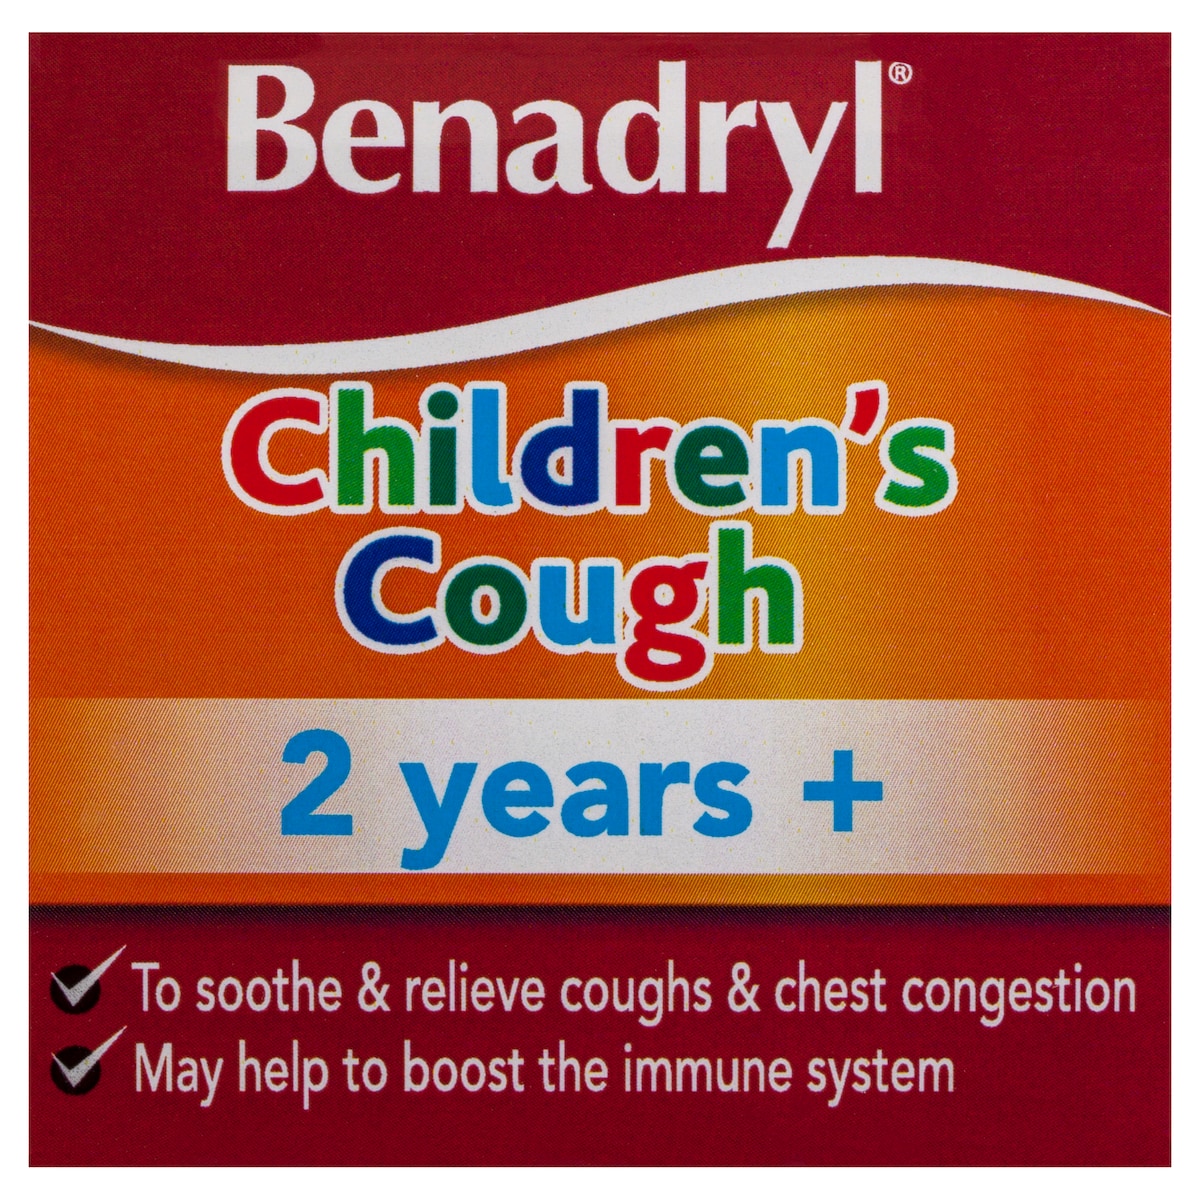 Benadryl Children's Cough 2 Years+ Honey Lemon Flavour 200Ml